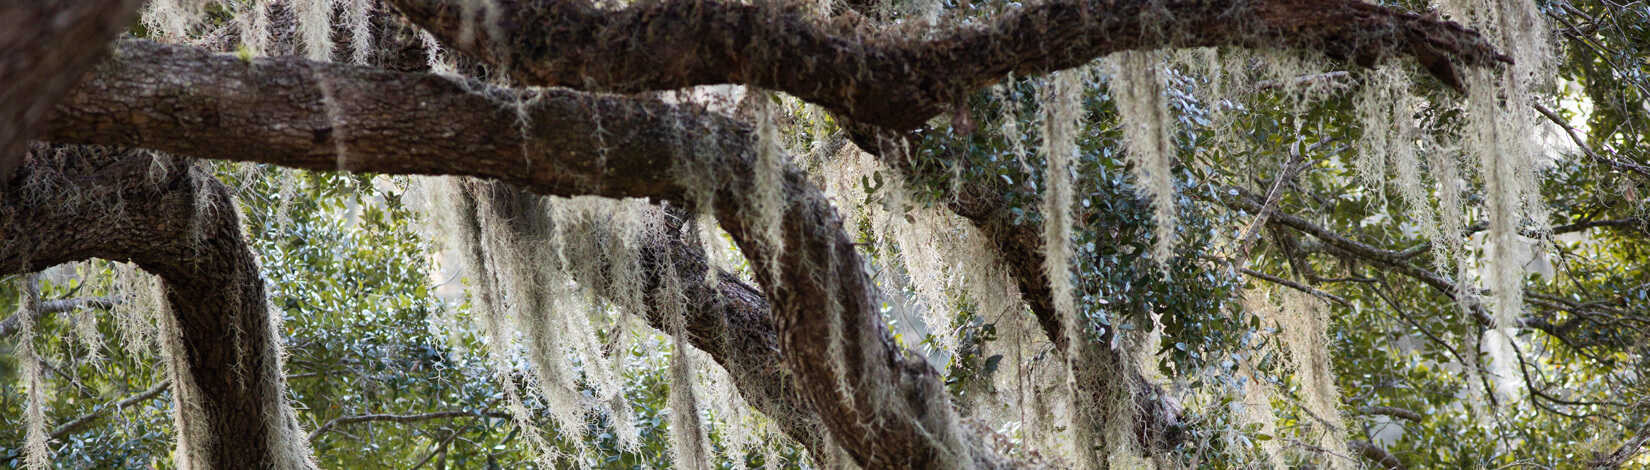 spanish moss hanging on an oak tree